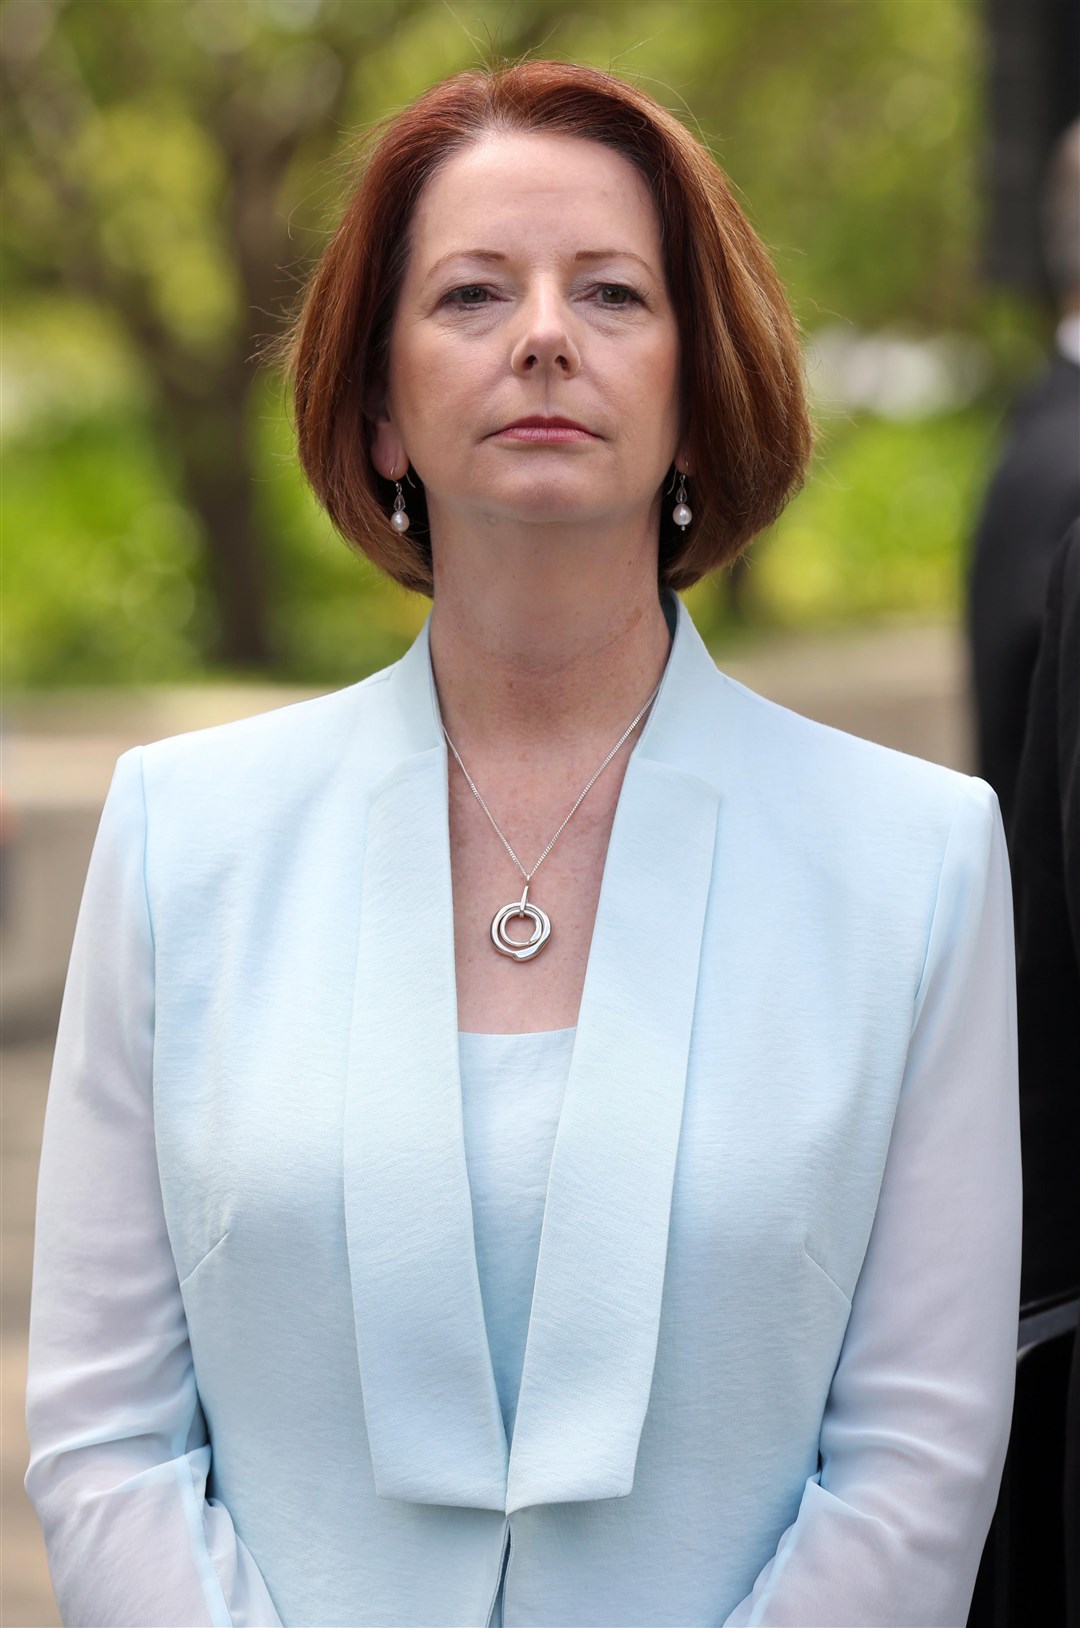 Former Australian prime minister Julia Gillard (Chris Radburn/PA)